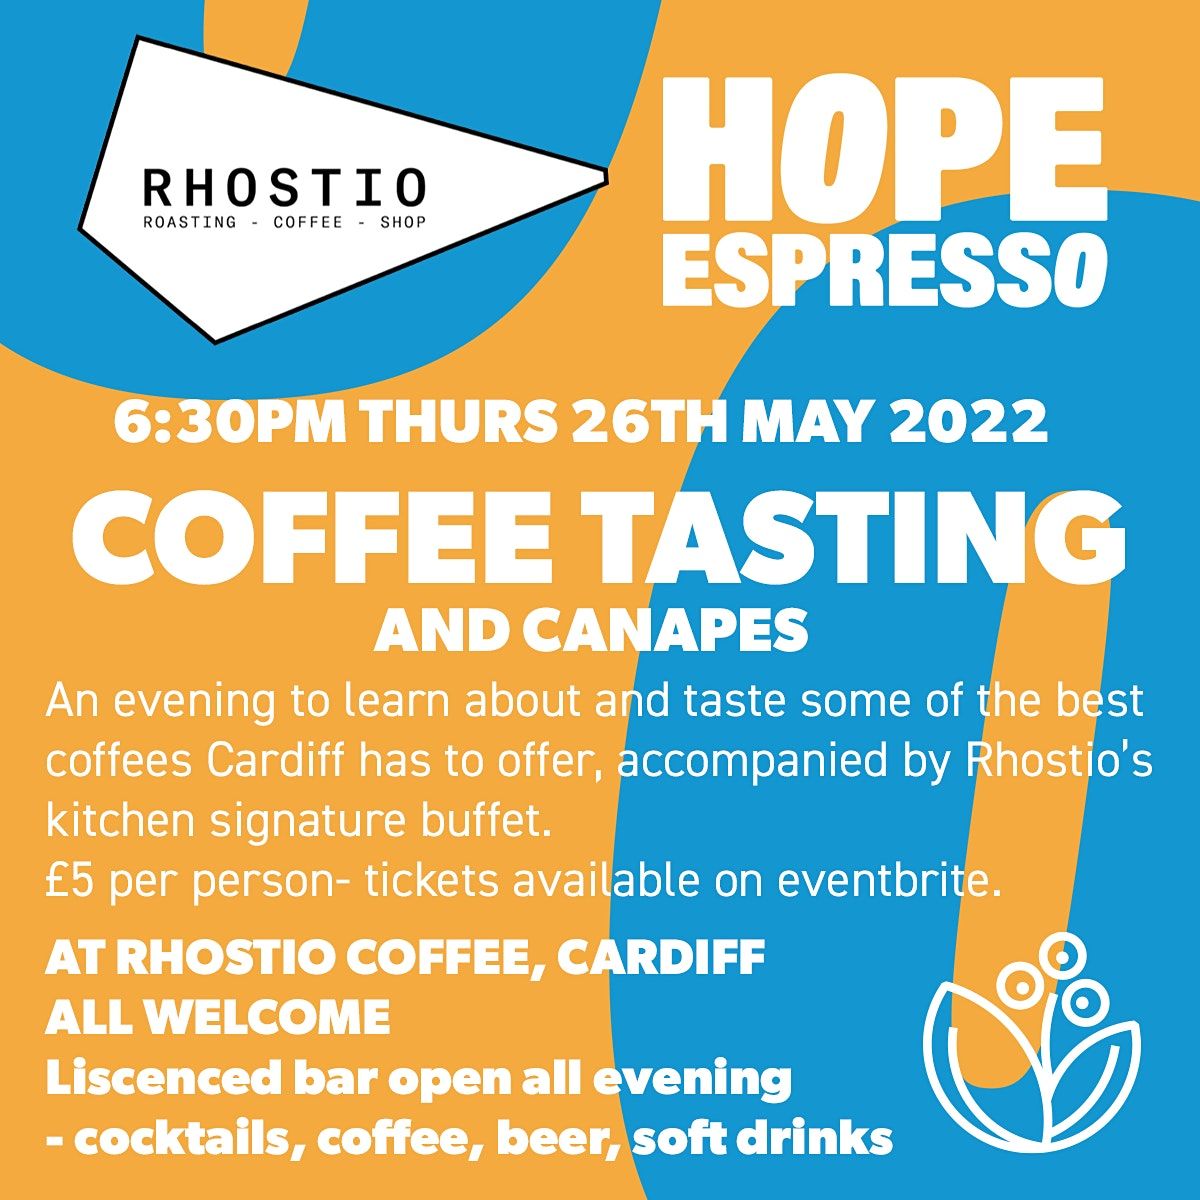 Hope Espresso X Rhostio - Coffee Tasting Event